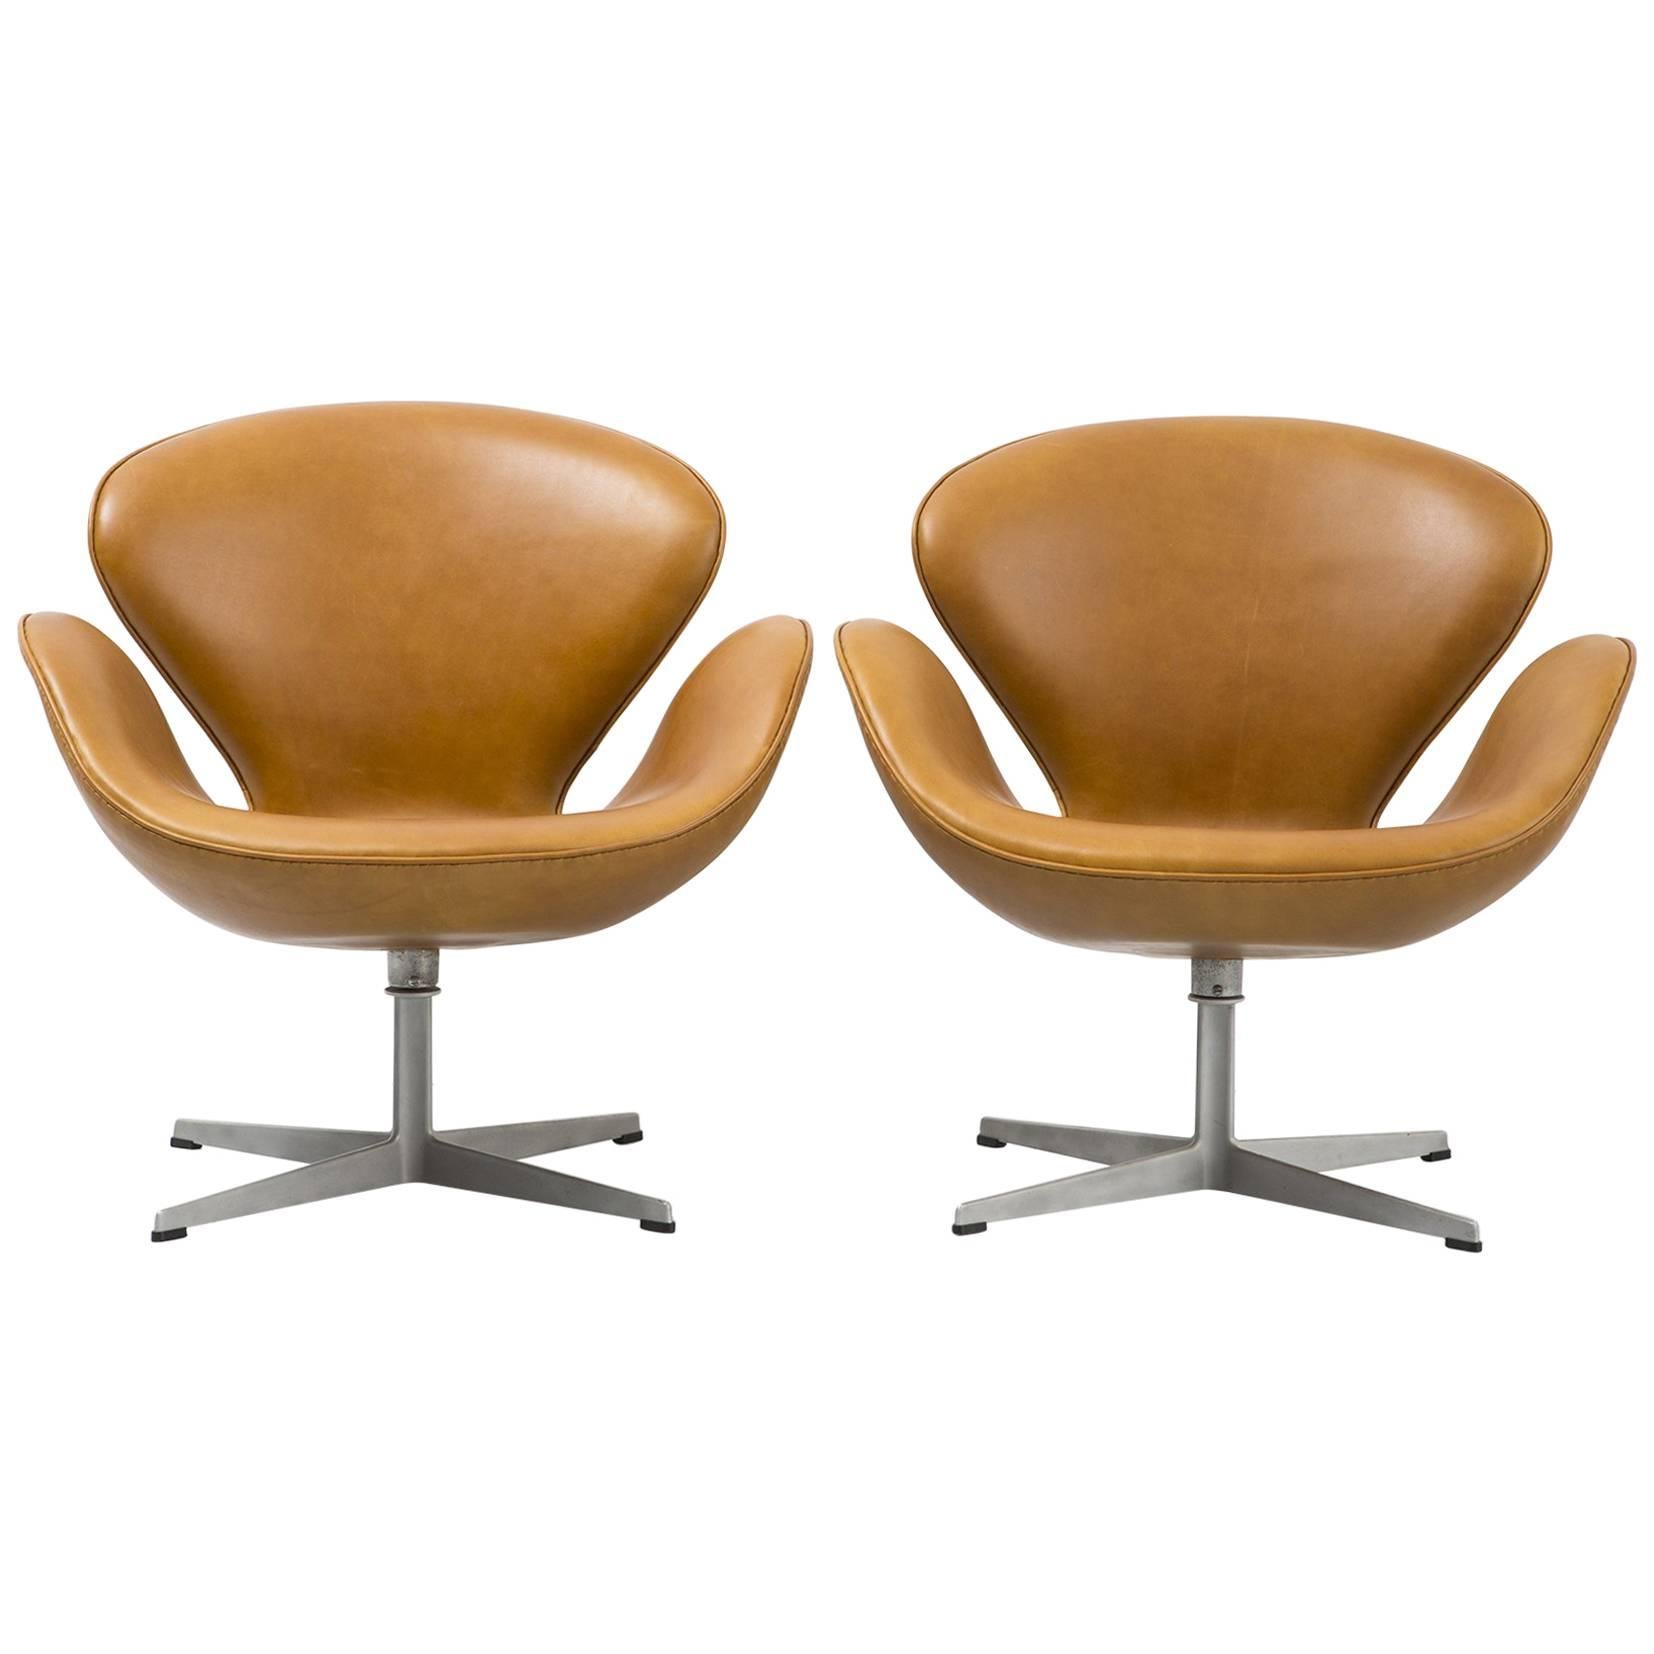 Set of Mid-Century Modern Swan Chairs by Arne Jacobsen Freshly Reupholstered